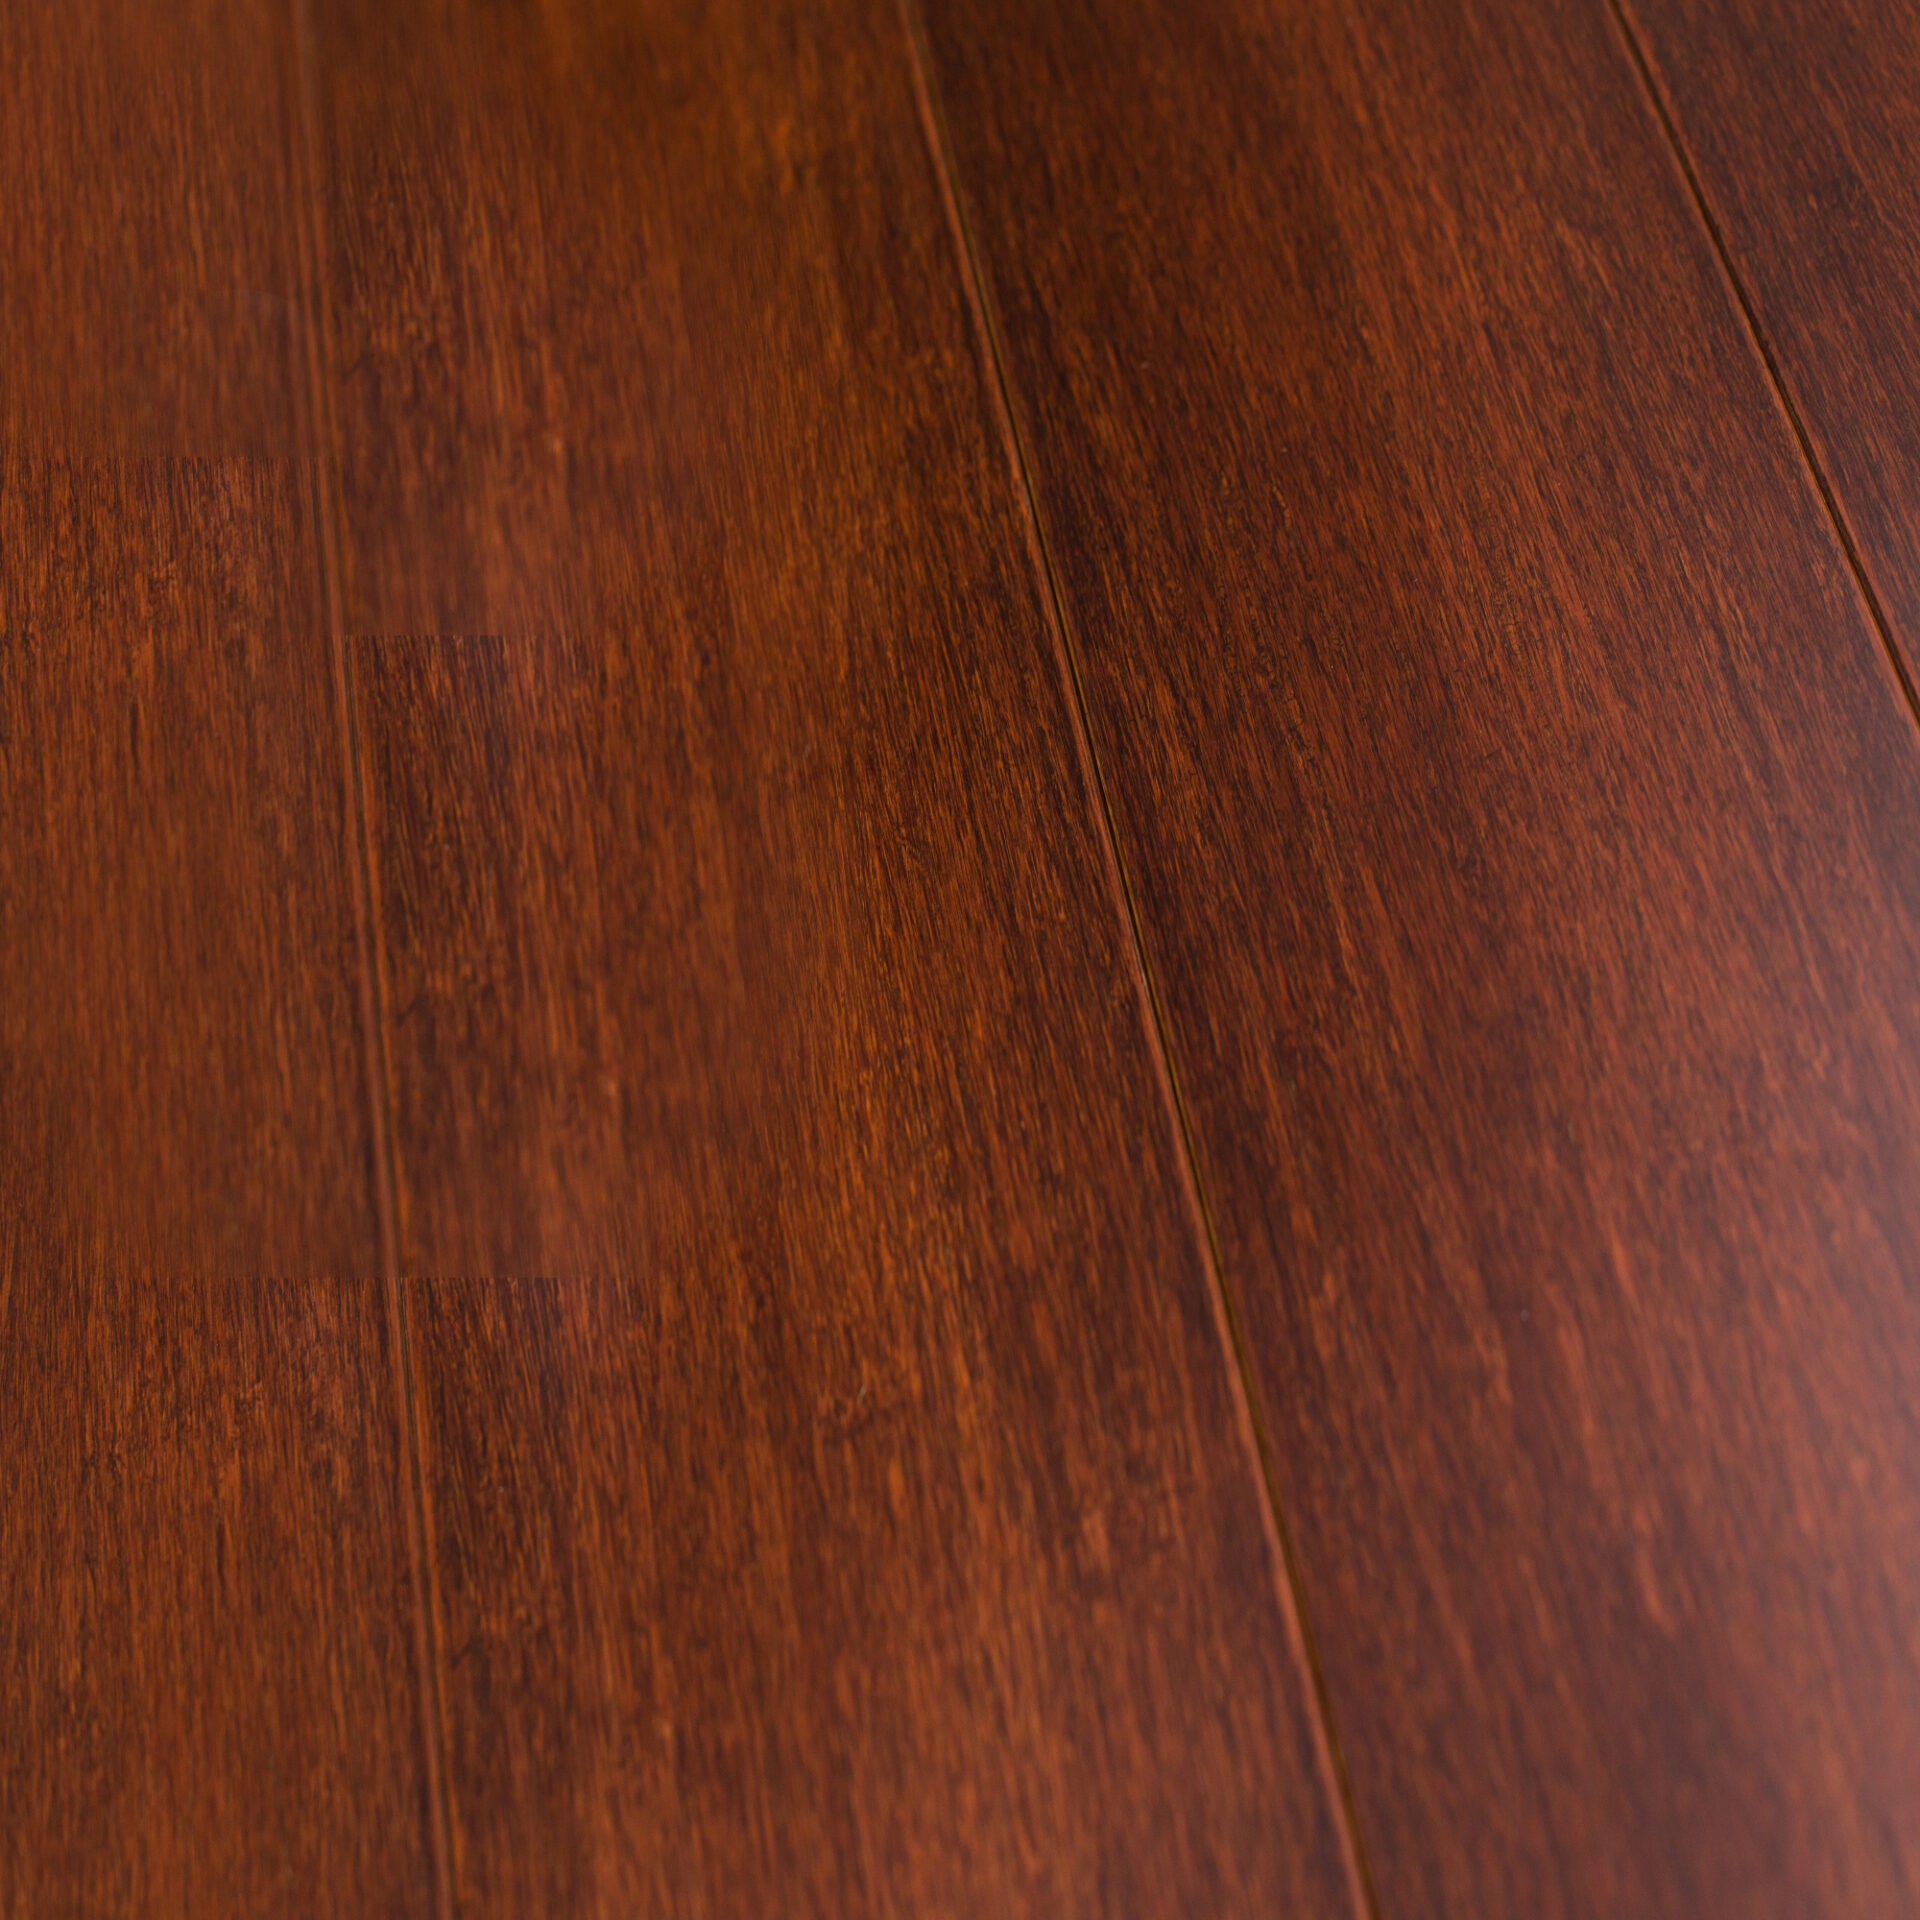 8039: Strand Woven Bamboo Flooring, Merbau Black Walnut: 1530x132x12mm